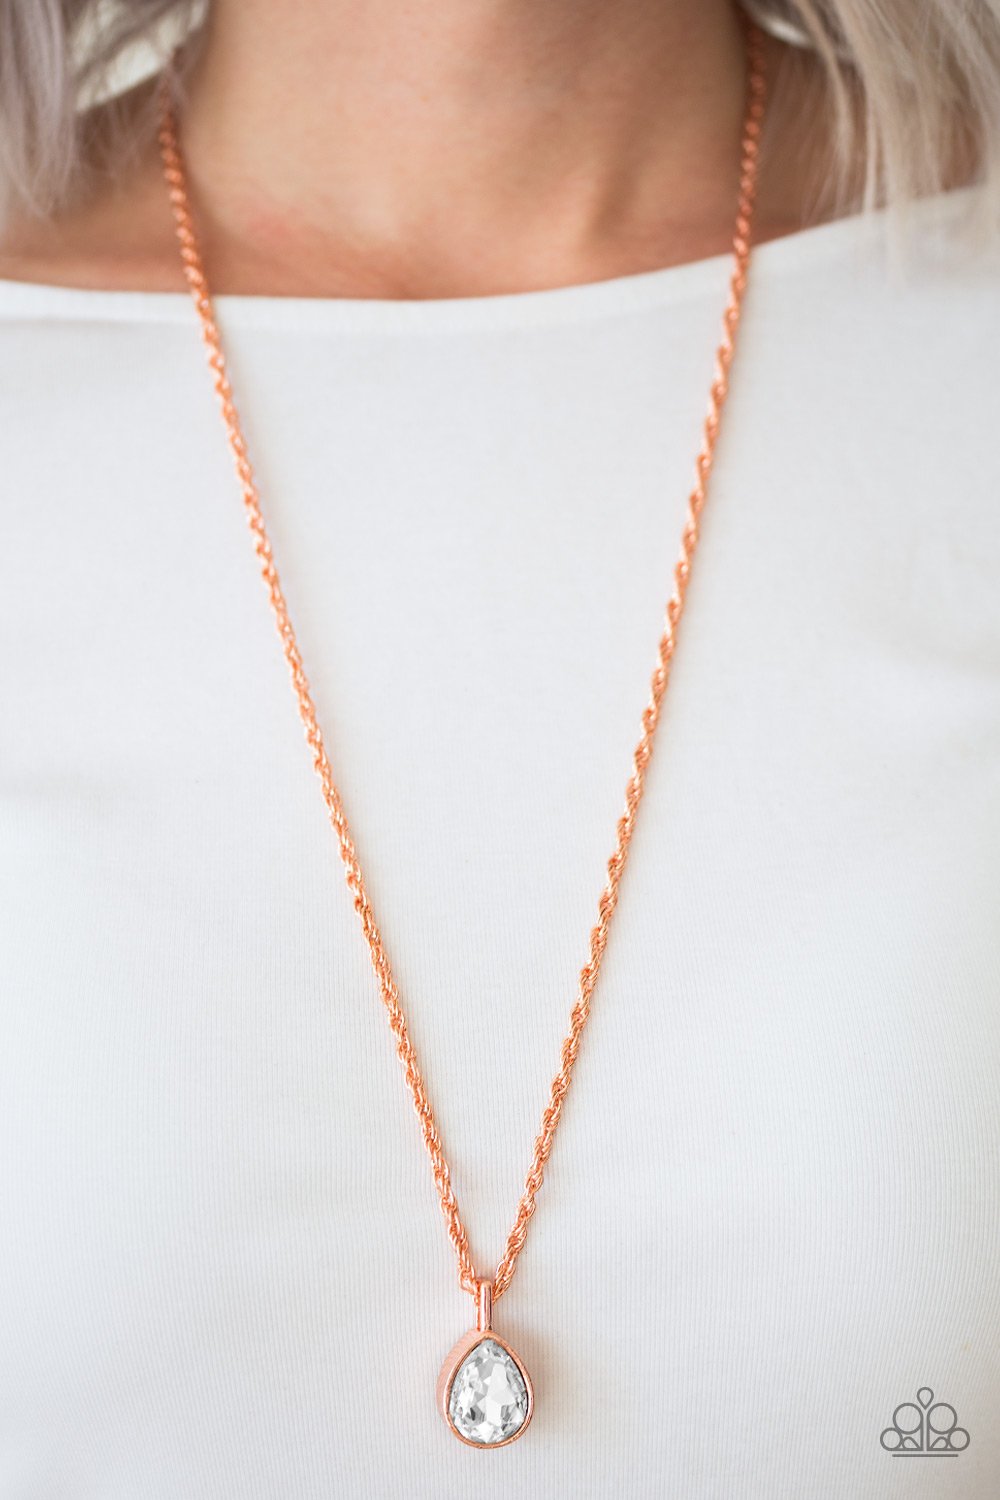 Million Dollar Drop - Shiny Copper necklace